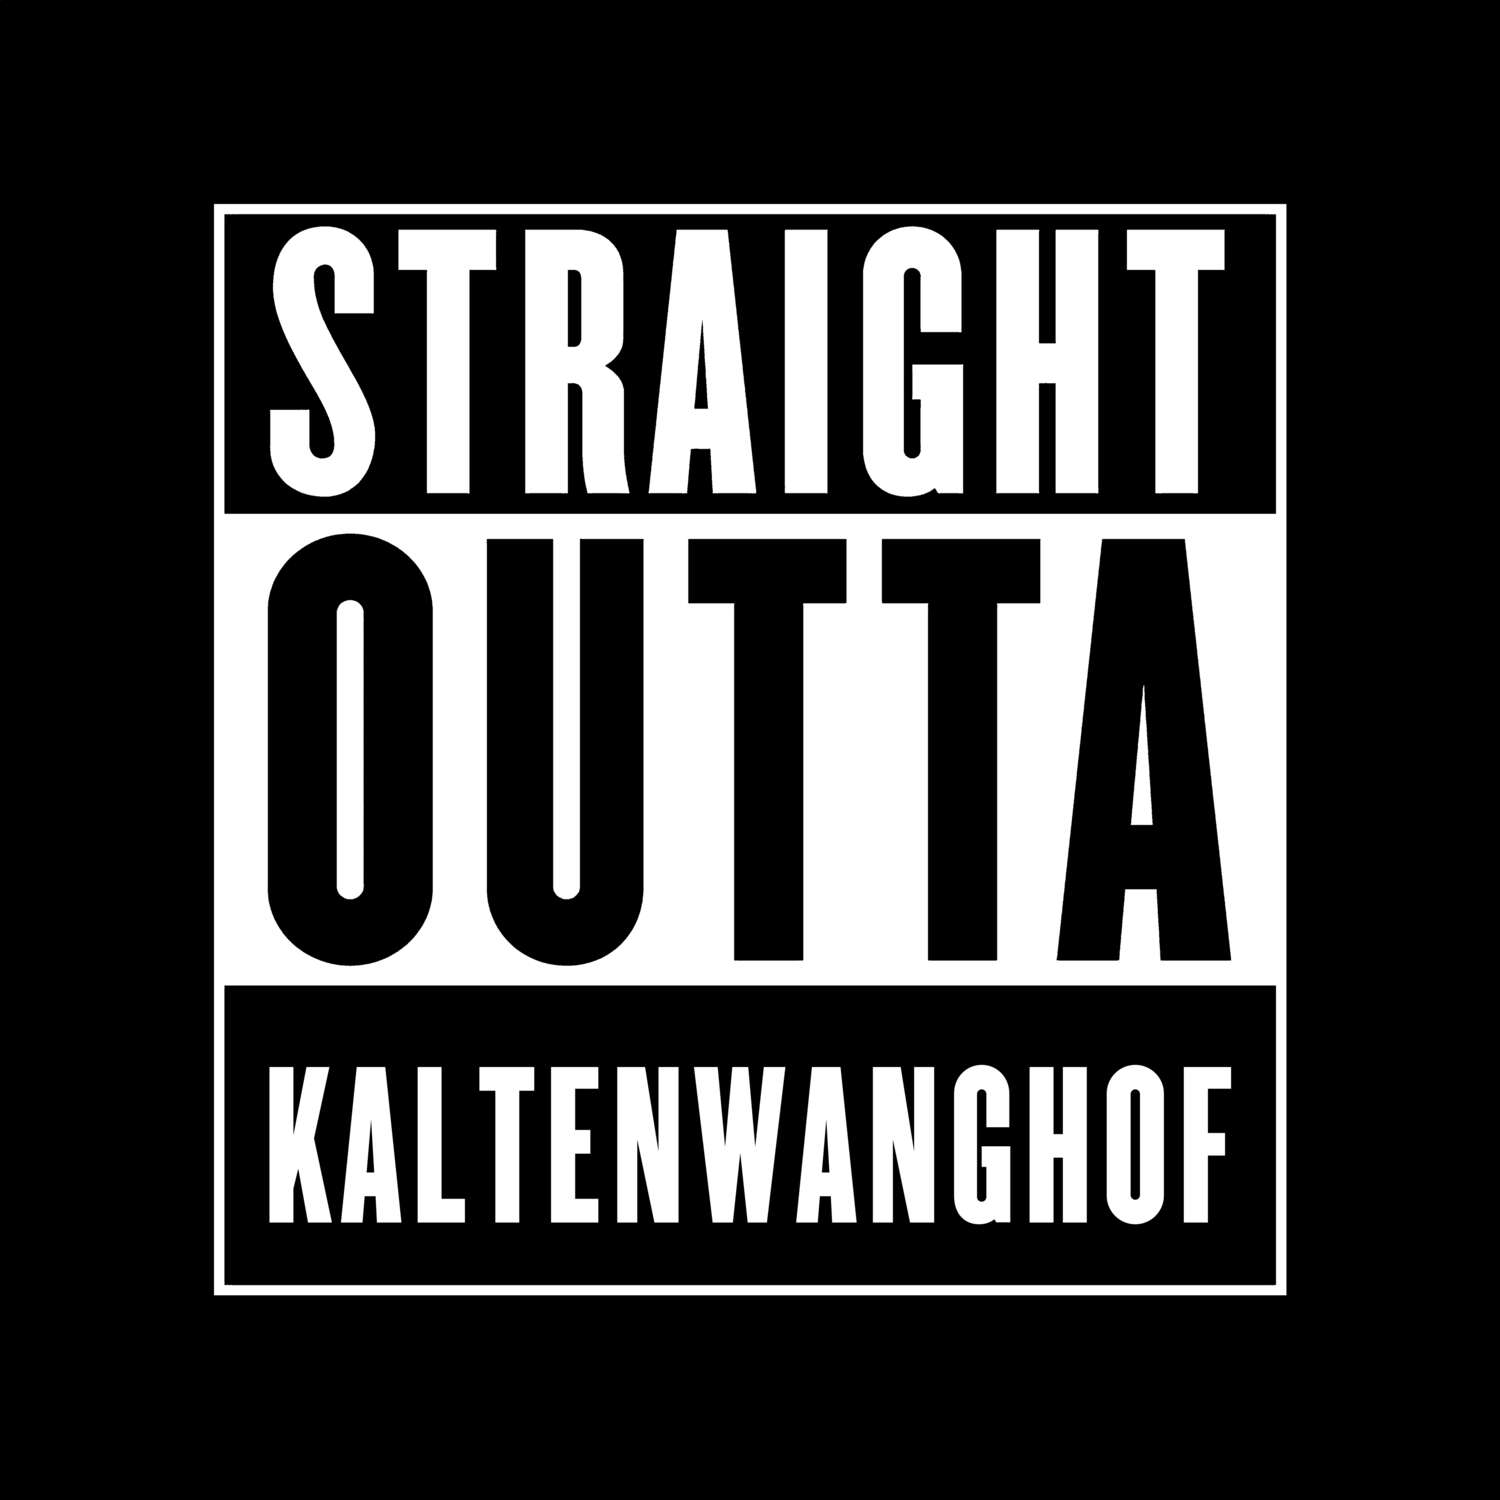 Kaltenwanghof T-Shirt »Straight Outta«